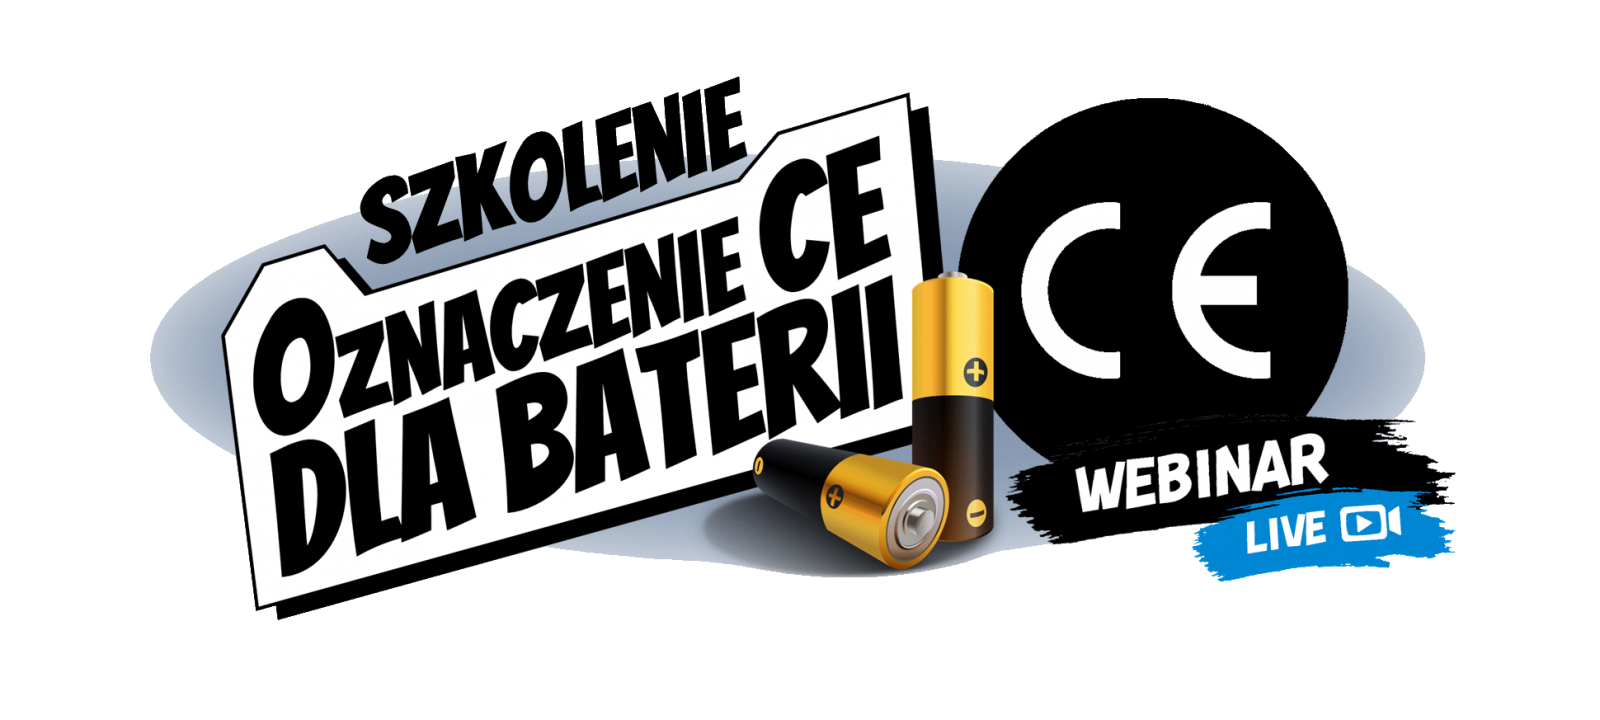 Webinar CE dla baterii